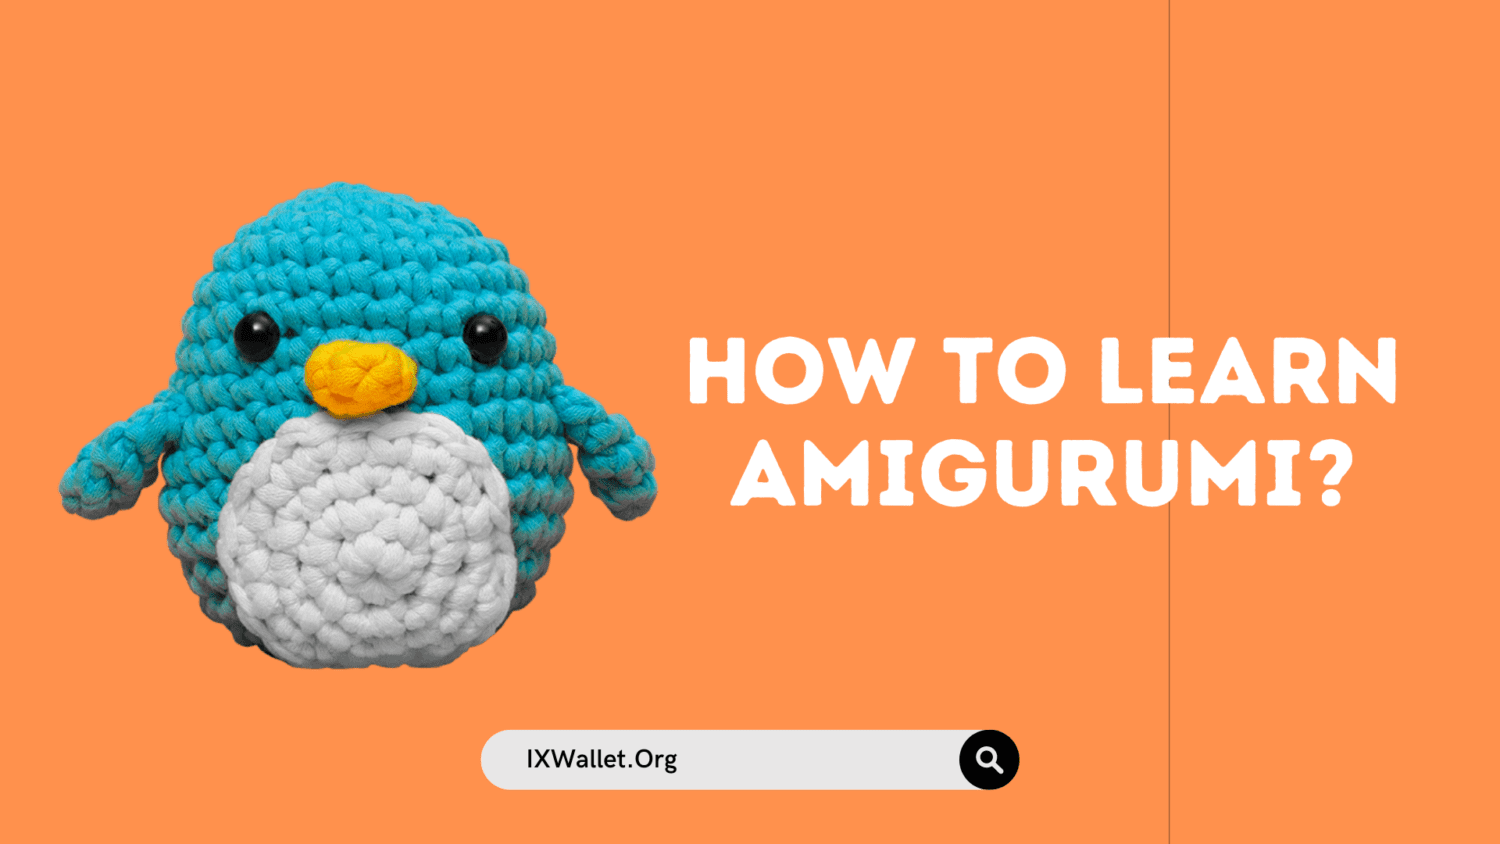 How to Learn Amigurumi (Crocheting) the Easy Way